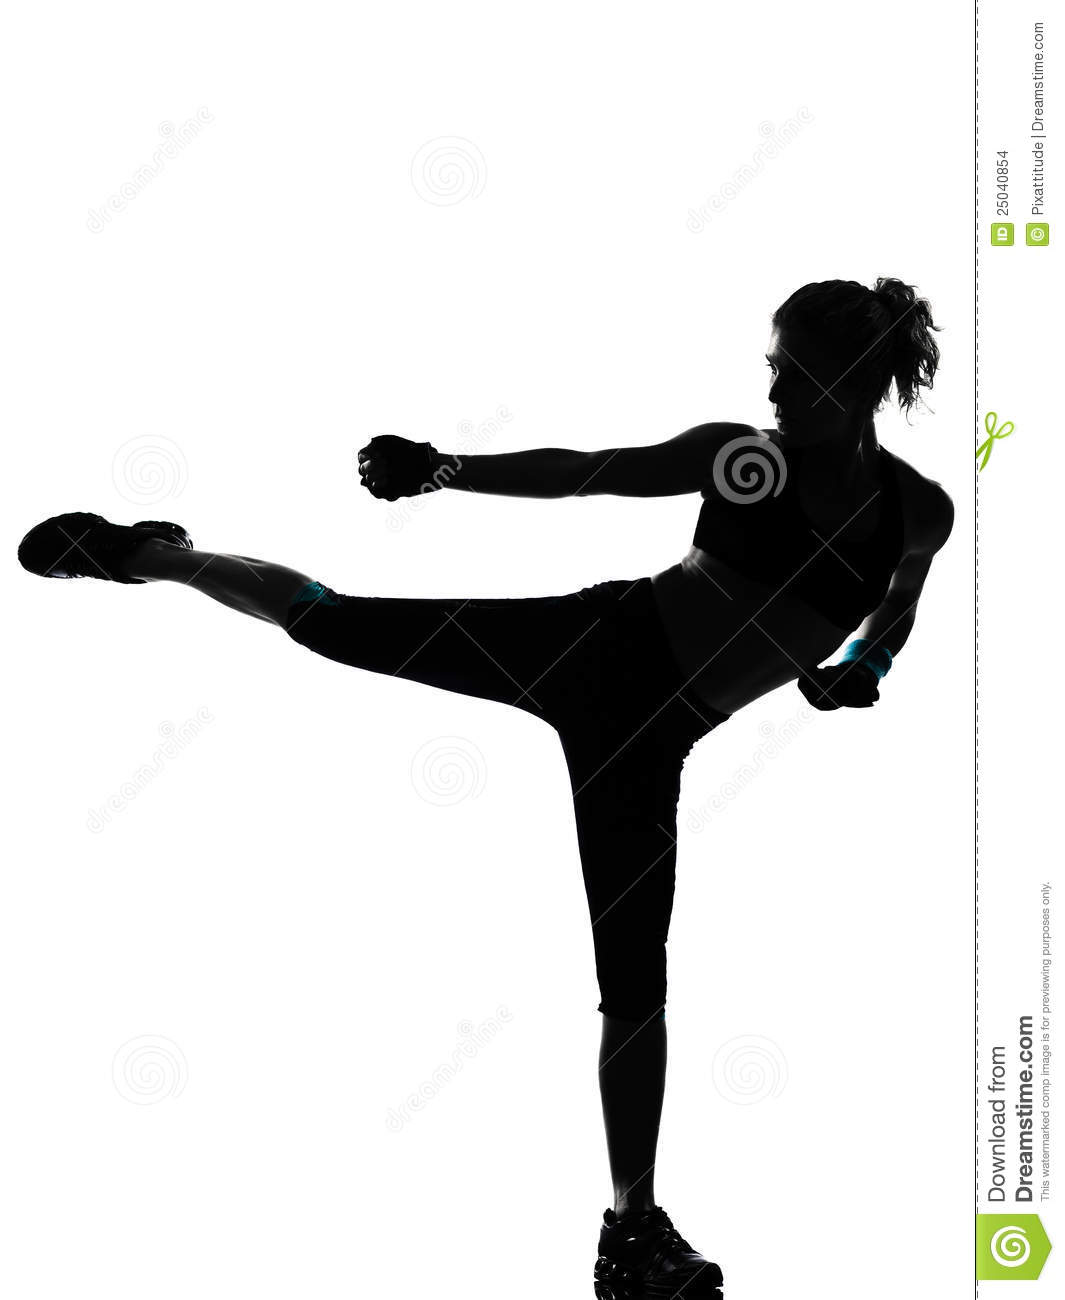 Woman Kickboxing Posture Boxer Boxing Stock Images   Image  25040854